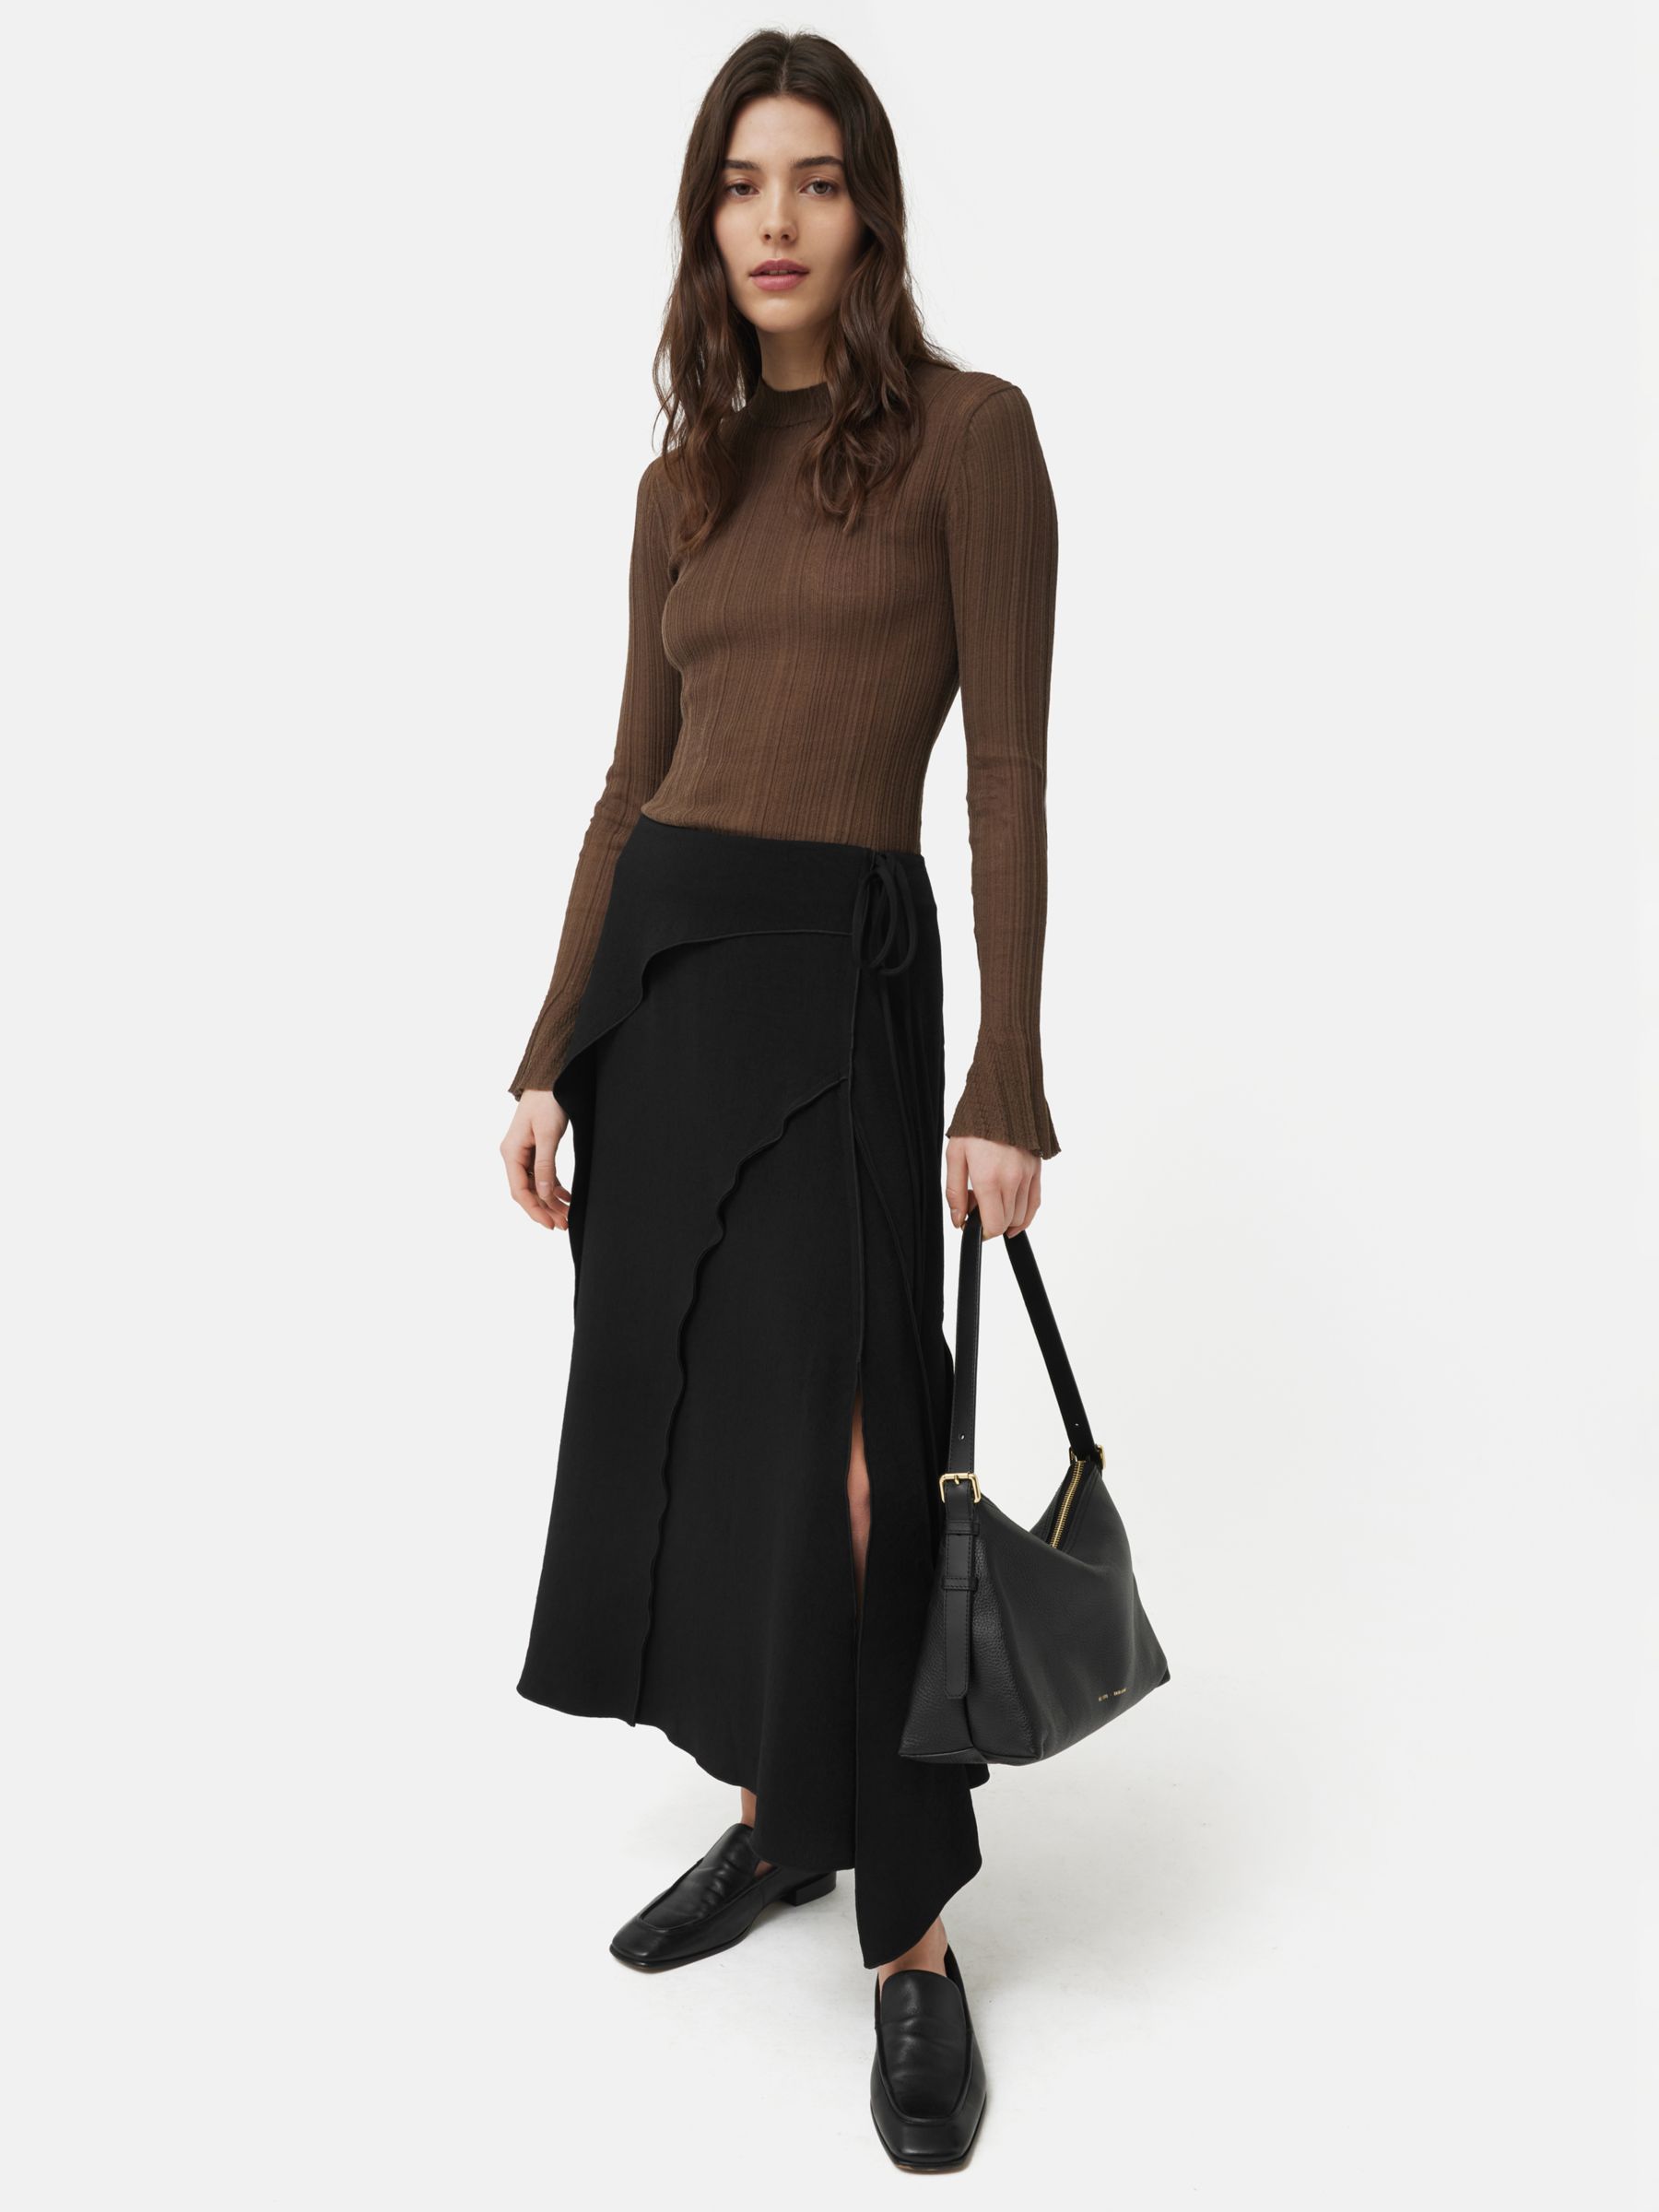 Jigsaw Seam Detail Crepe Midi Skirt, Black, 6